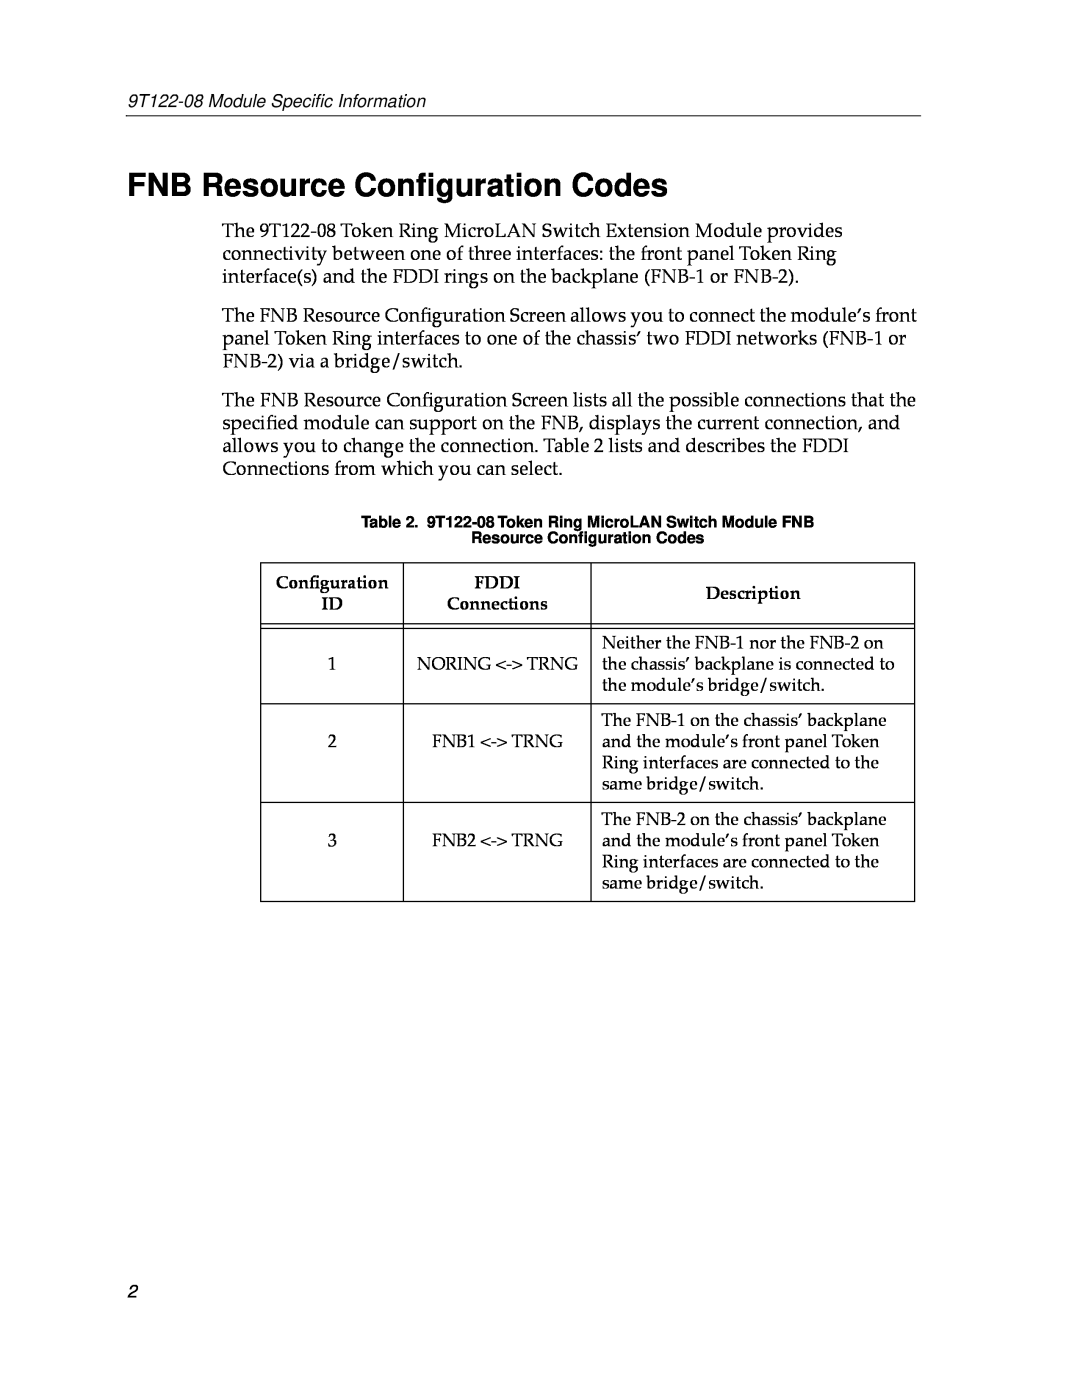 Cabletron Systems appendix FNB Resource Conﬁguration Codes, 9T122-08 Module Speciﬁc Information 